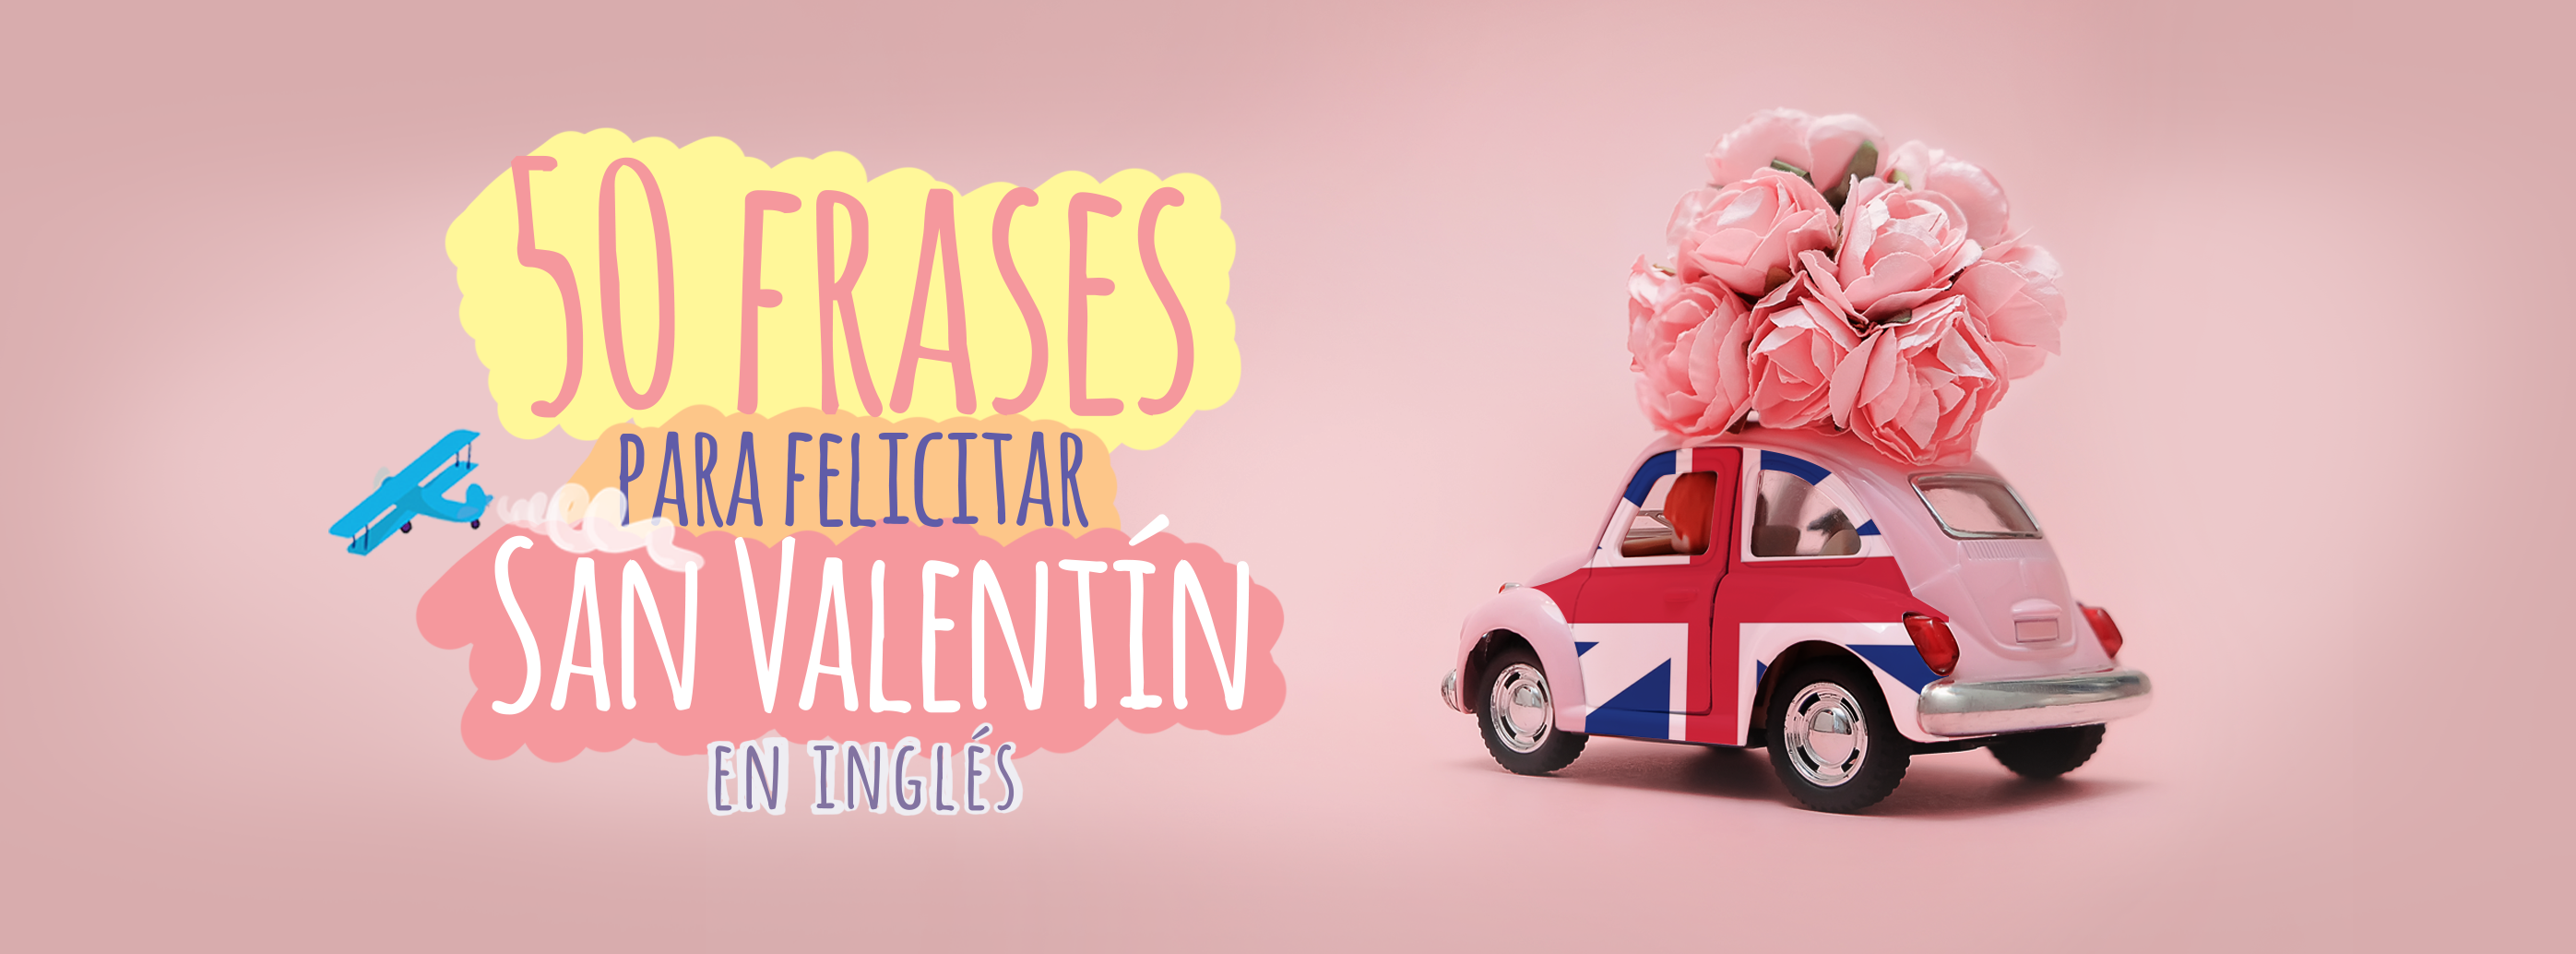 50 Frases Para Felicitar San Valentin En Ingles Elblogdeidiomas Es